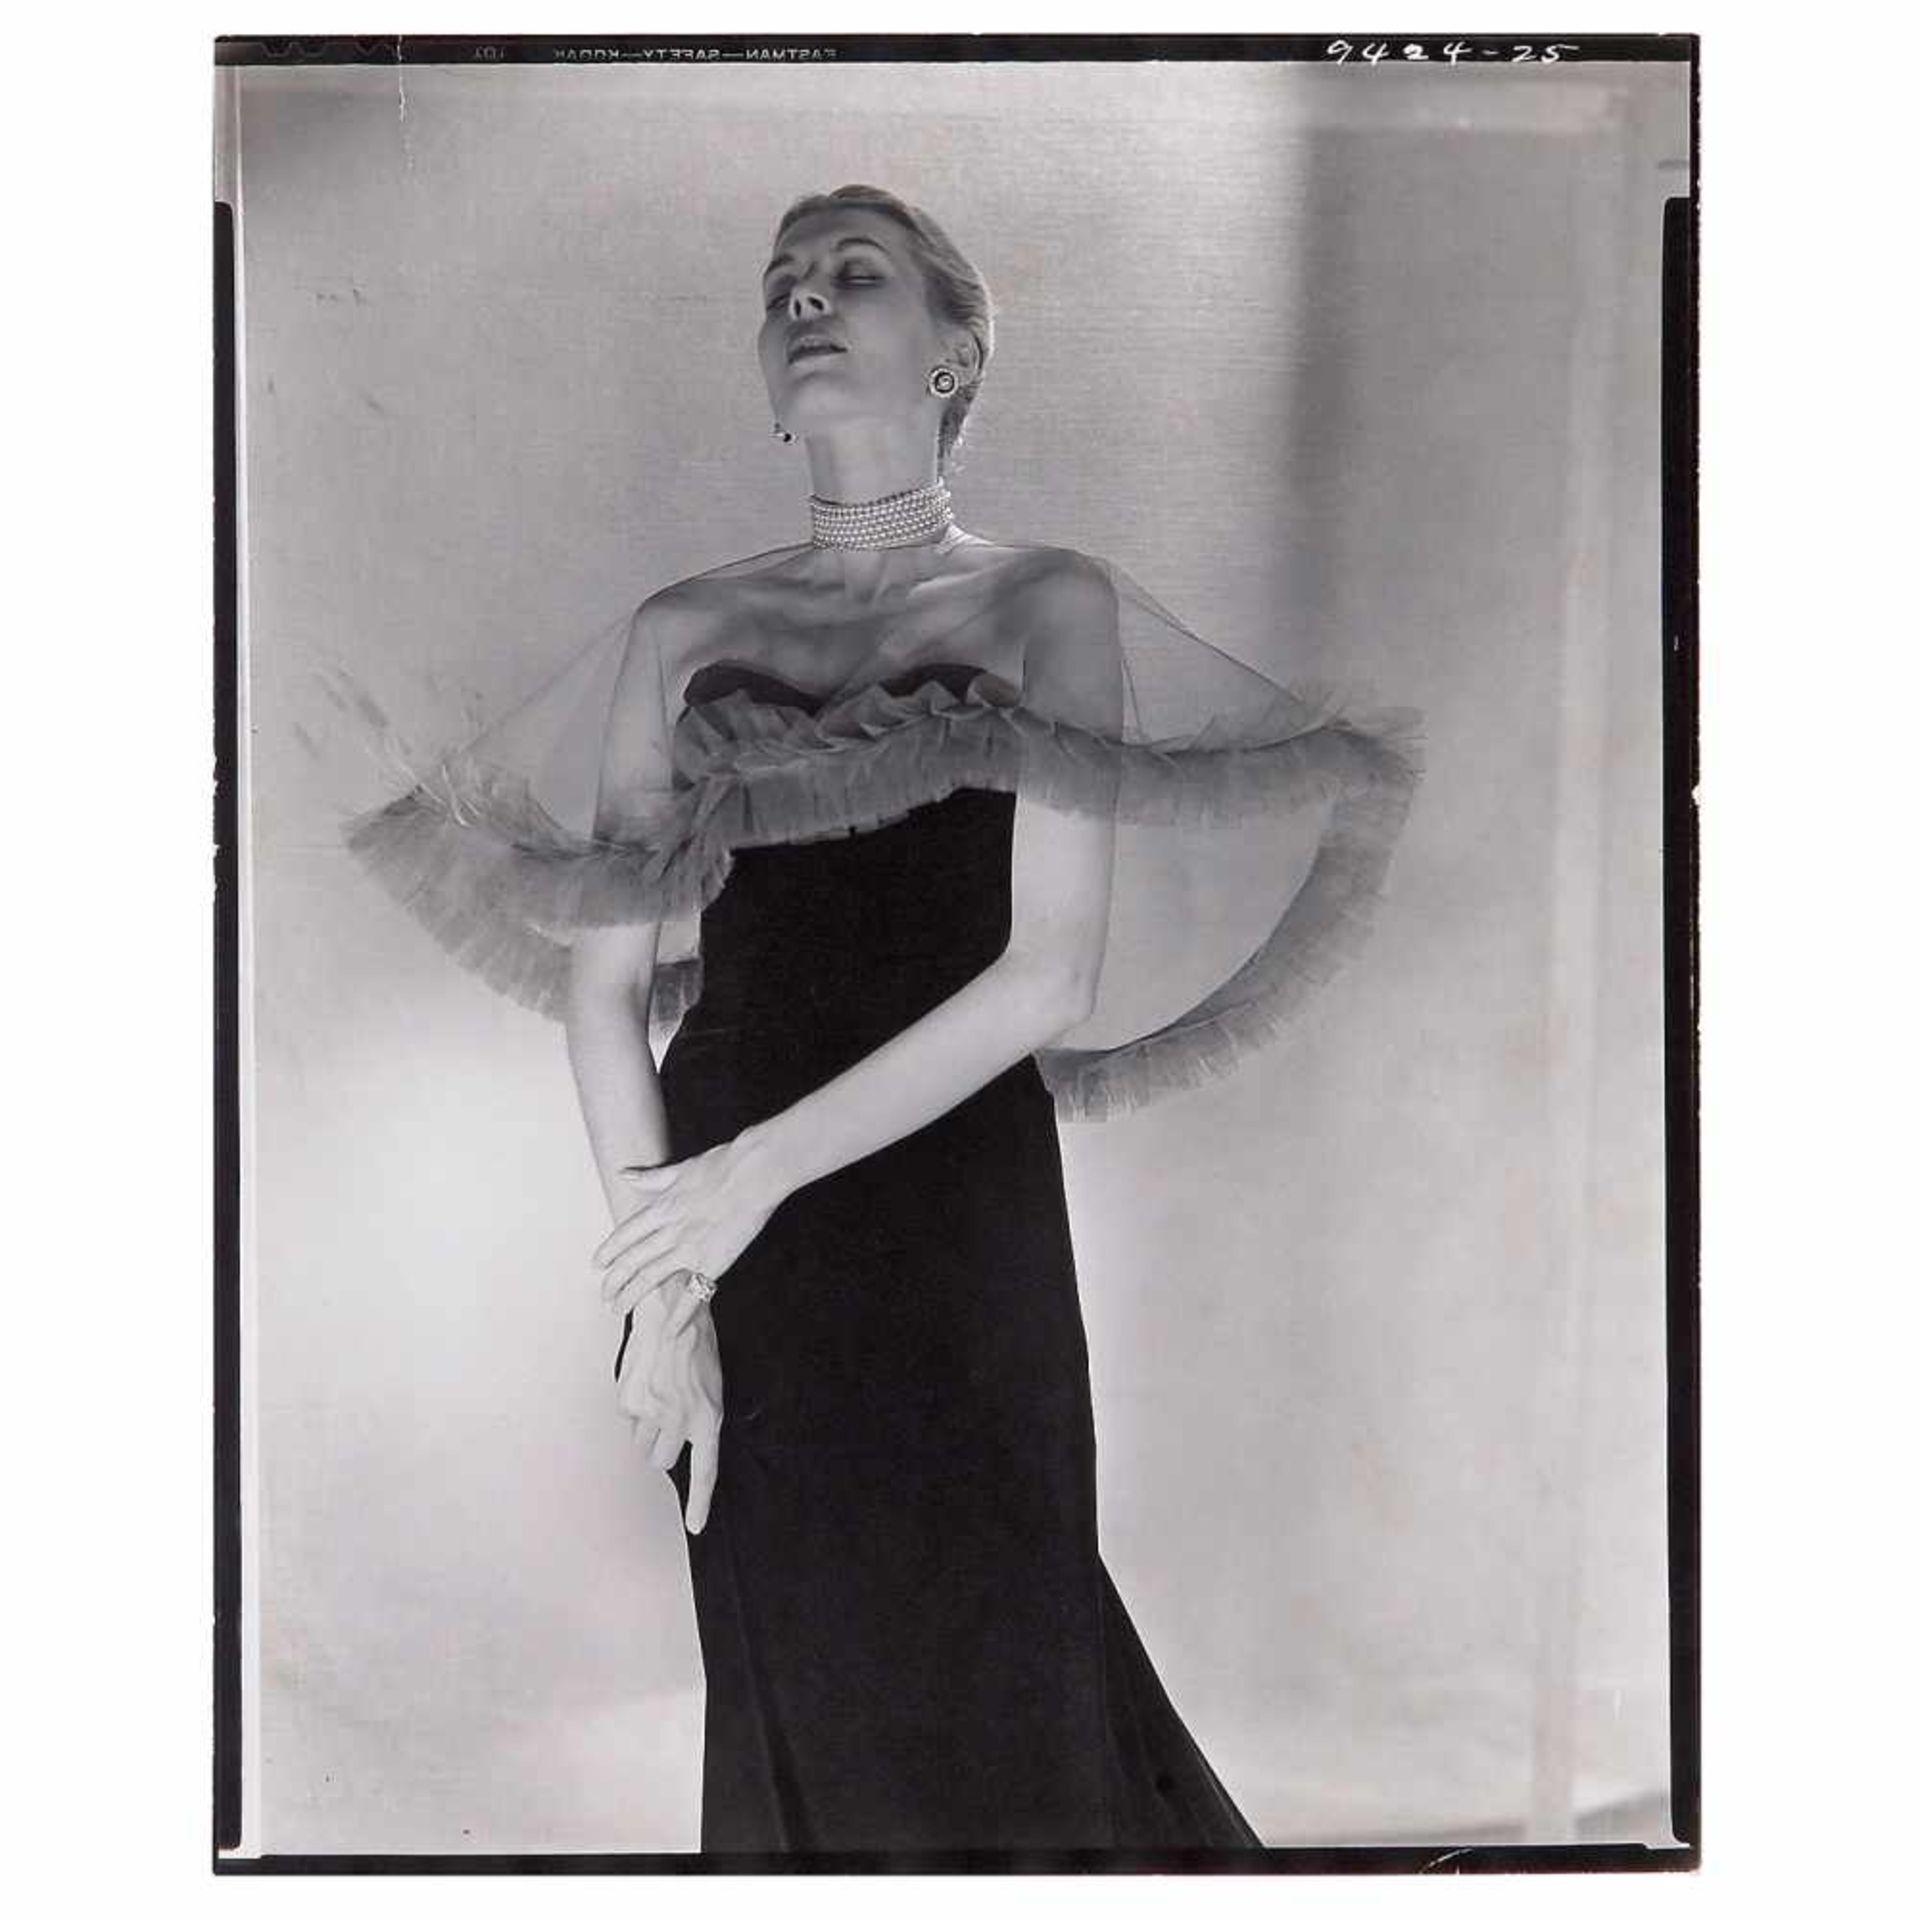 Sir Cecil Beaton (1904–1980)"Fashion Study", 1930. Silver print 20 x 25 cm. Front label: "Neg. No.